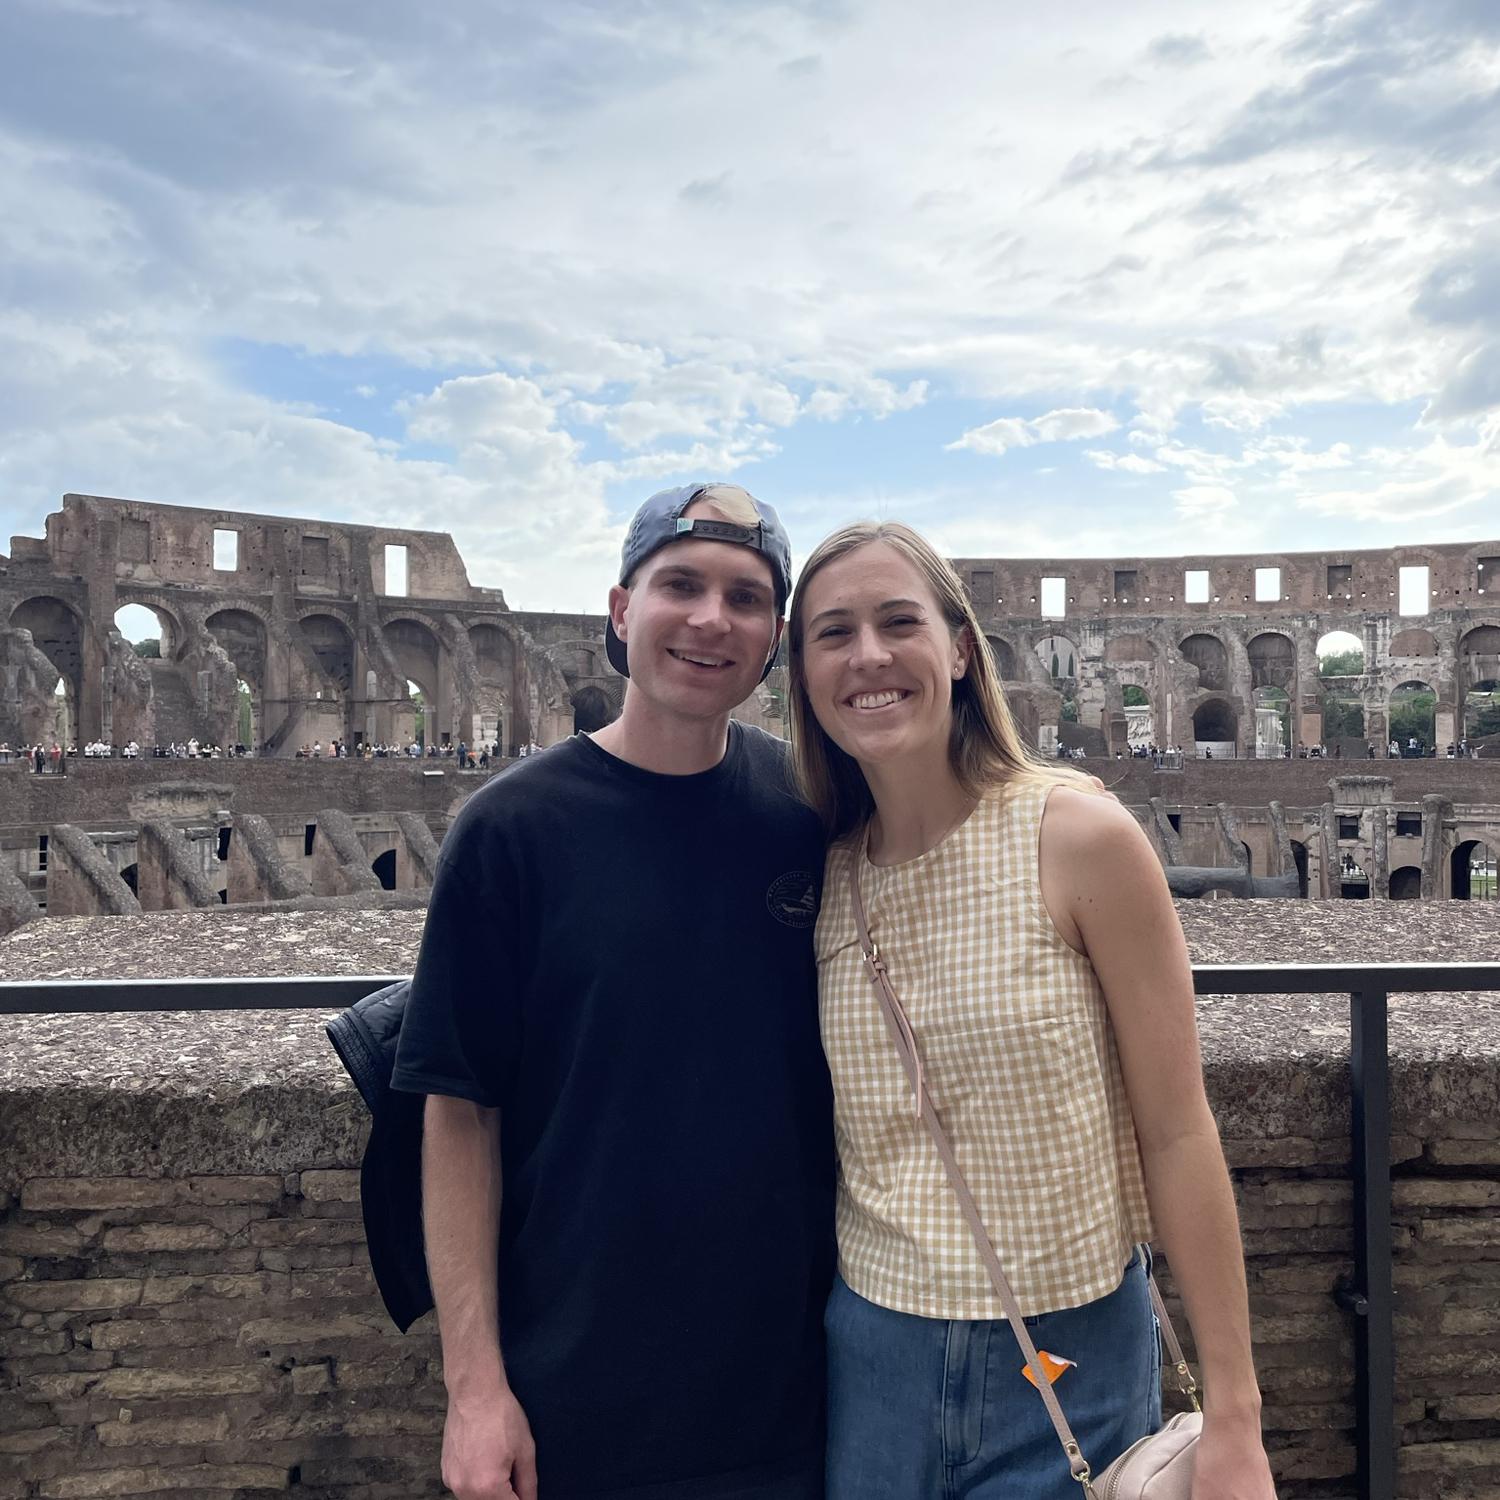 The Colosseum! 
5/8/2022